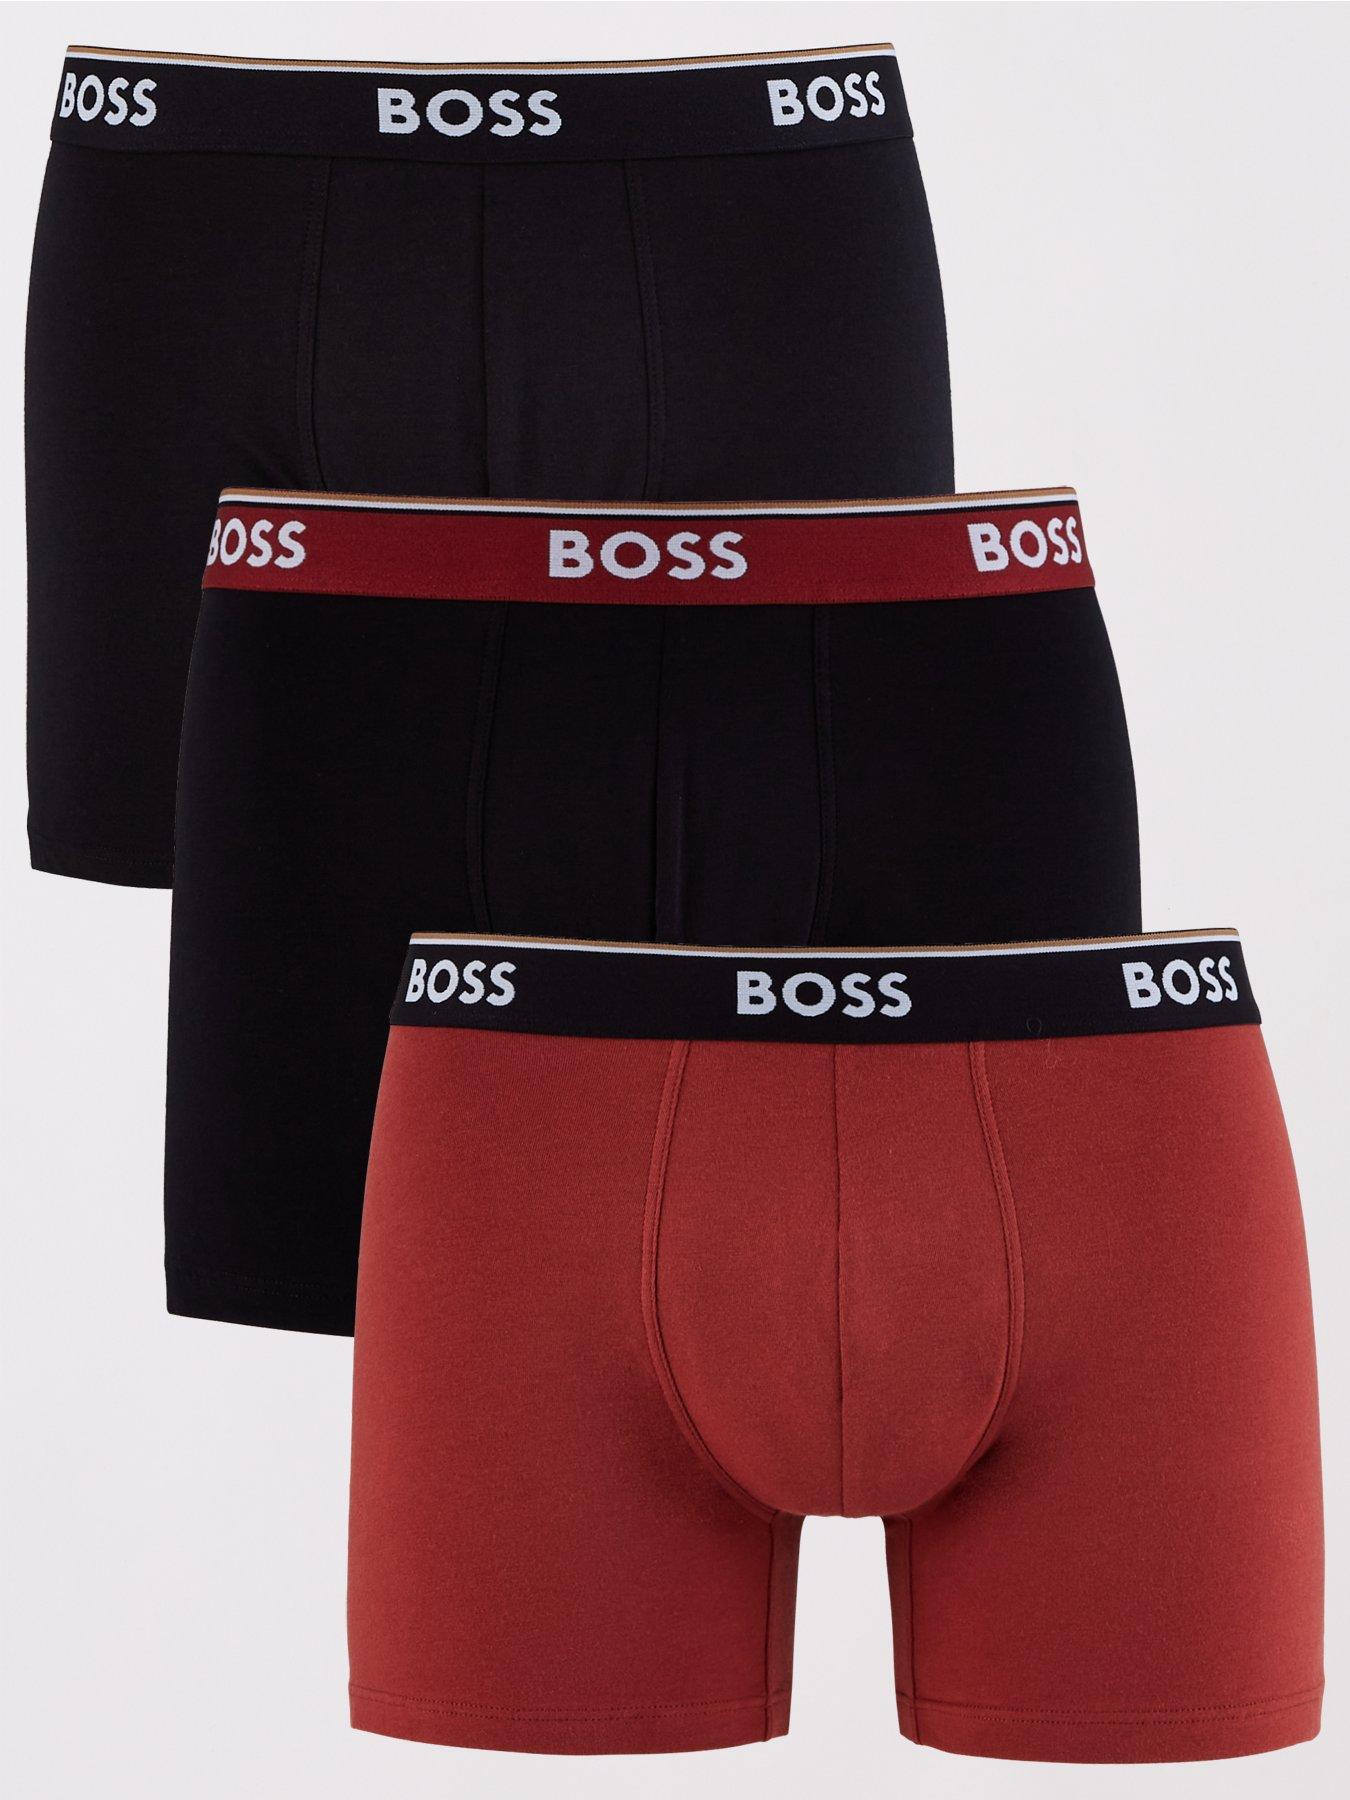 BOSS Bodywear Men's 3 Pack Crew Neck T-Shirts - Black/Khaki/Navy